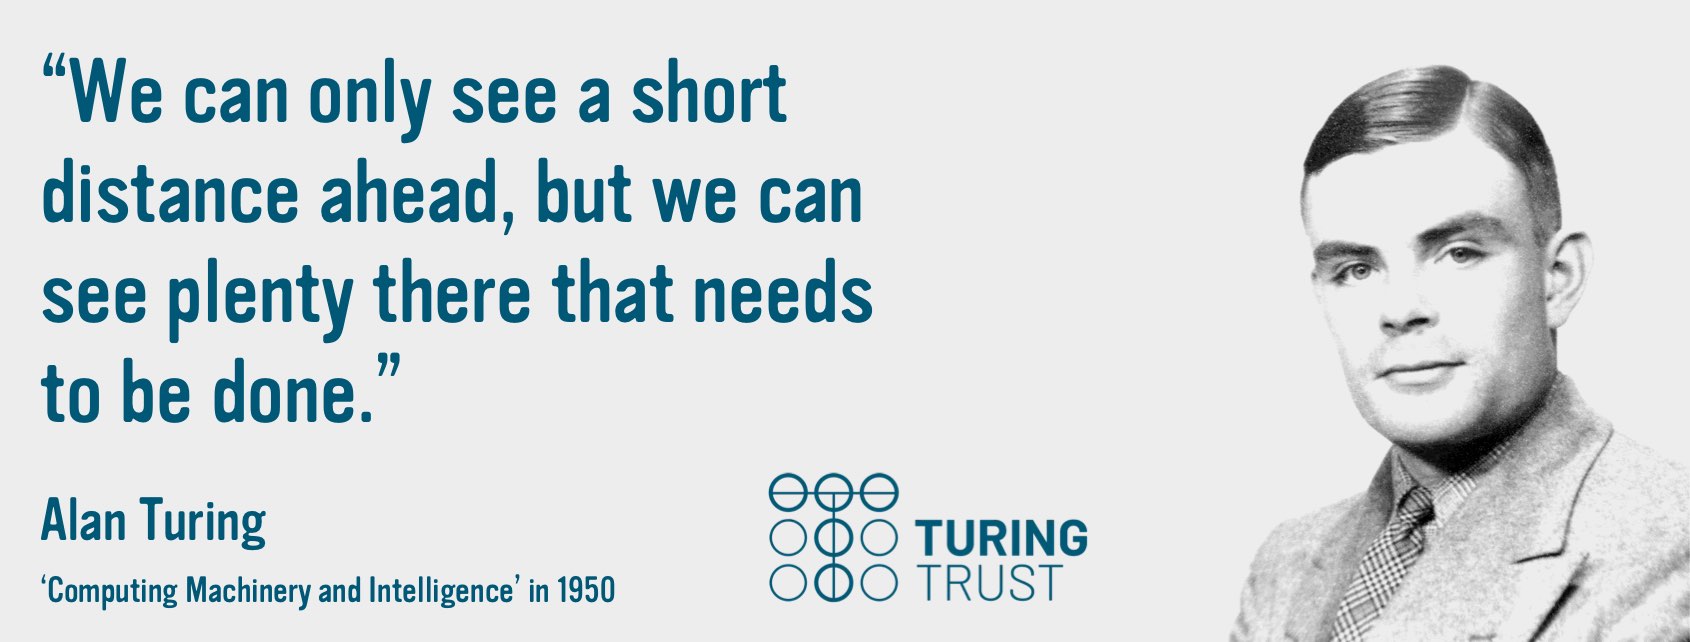 The Turing Trust